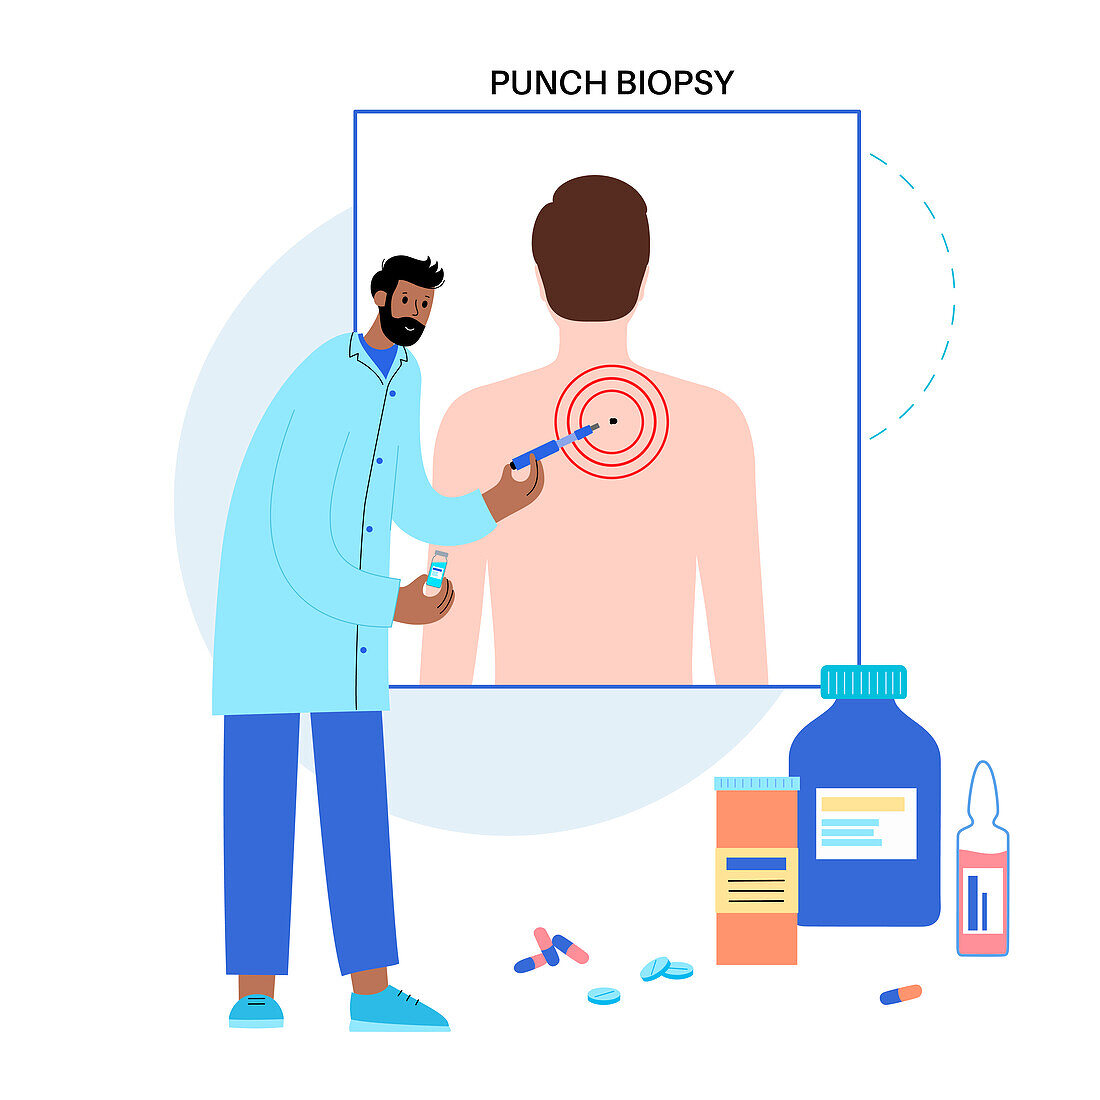 Punch biopsy, illustration